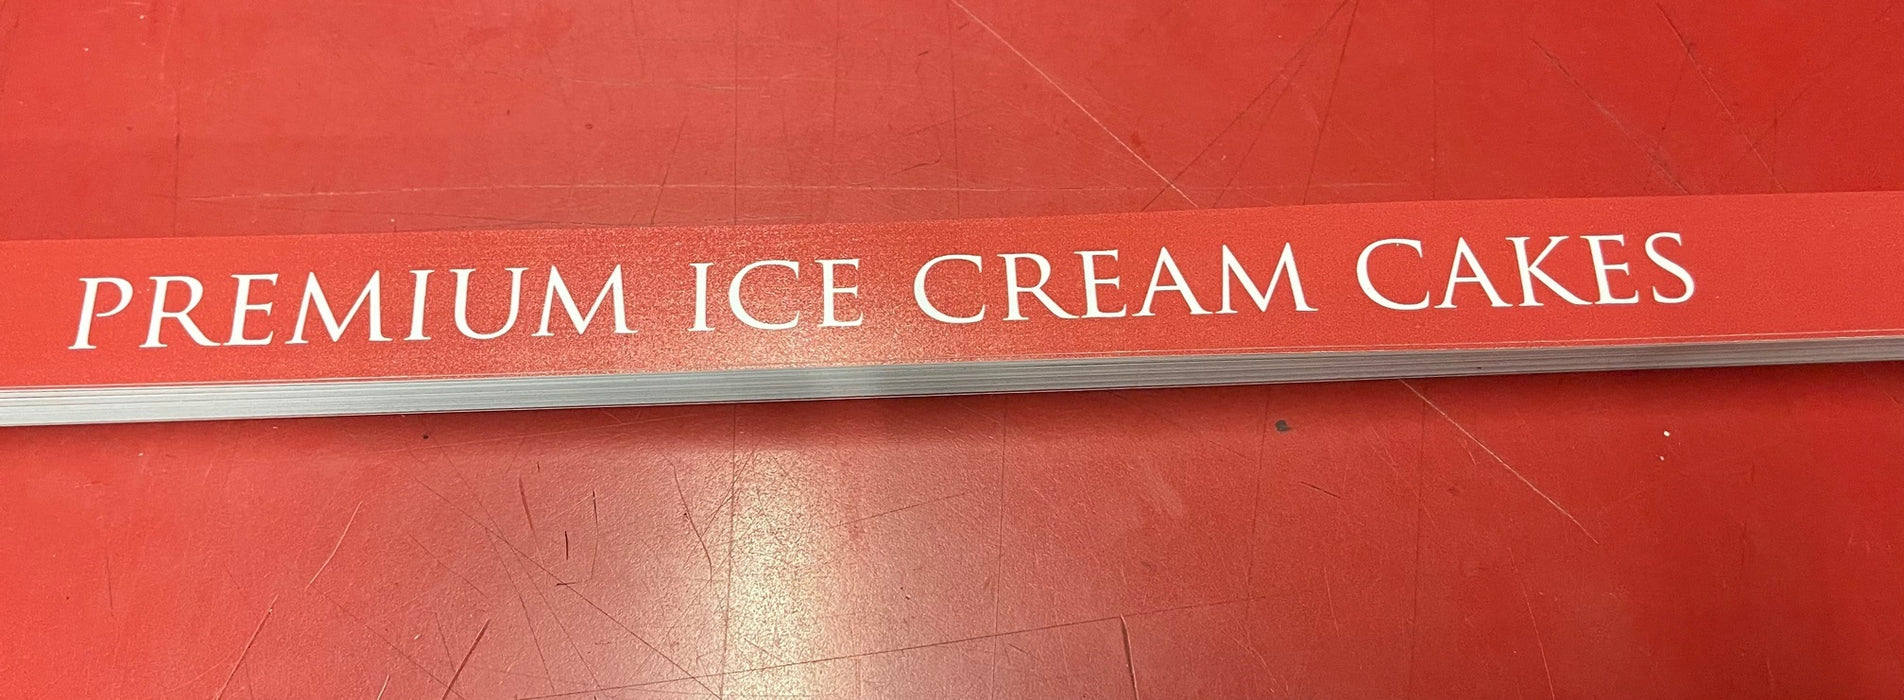 Premium Ice Cream Cakes Price Channel Molding Shelf Strips-24"W x 1.25"H -10 pieces